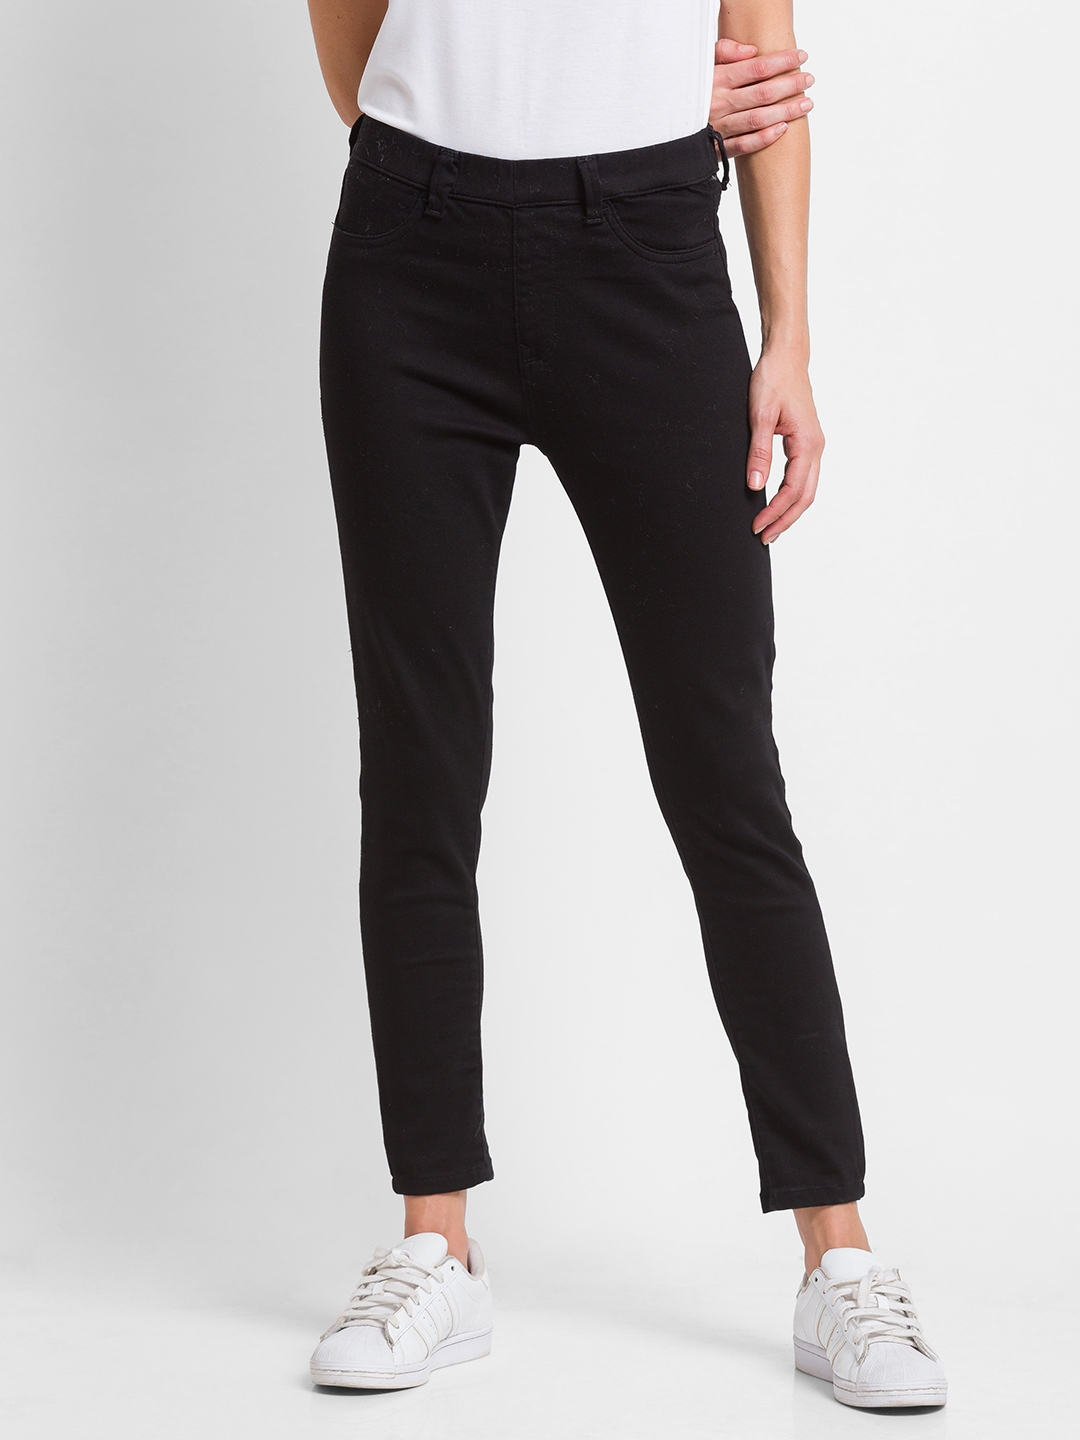 spykar | Women's Black Lycra Solid Slim Jeans